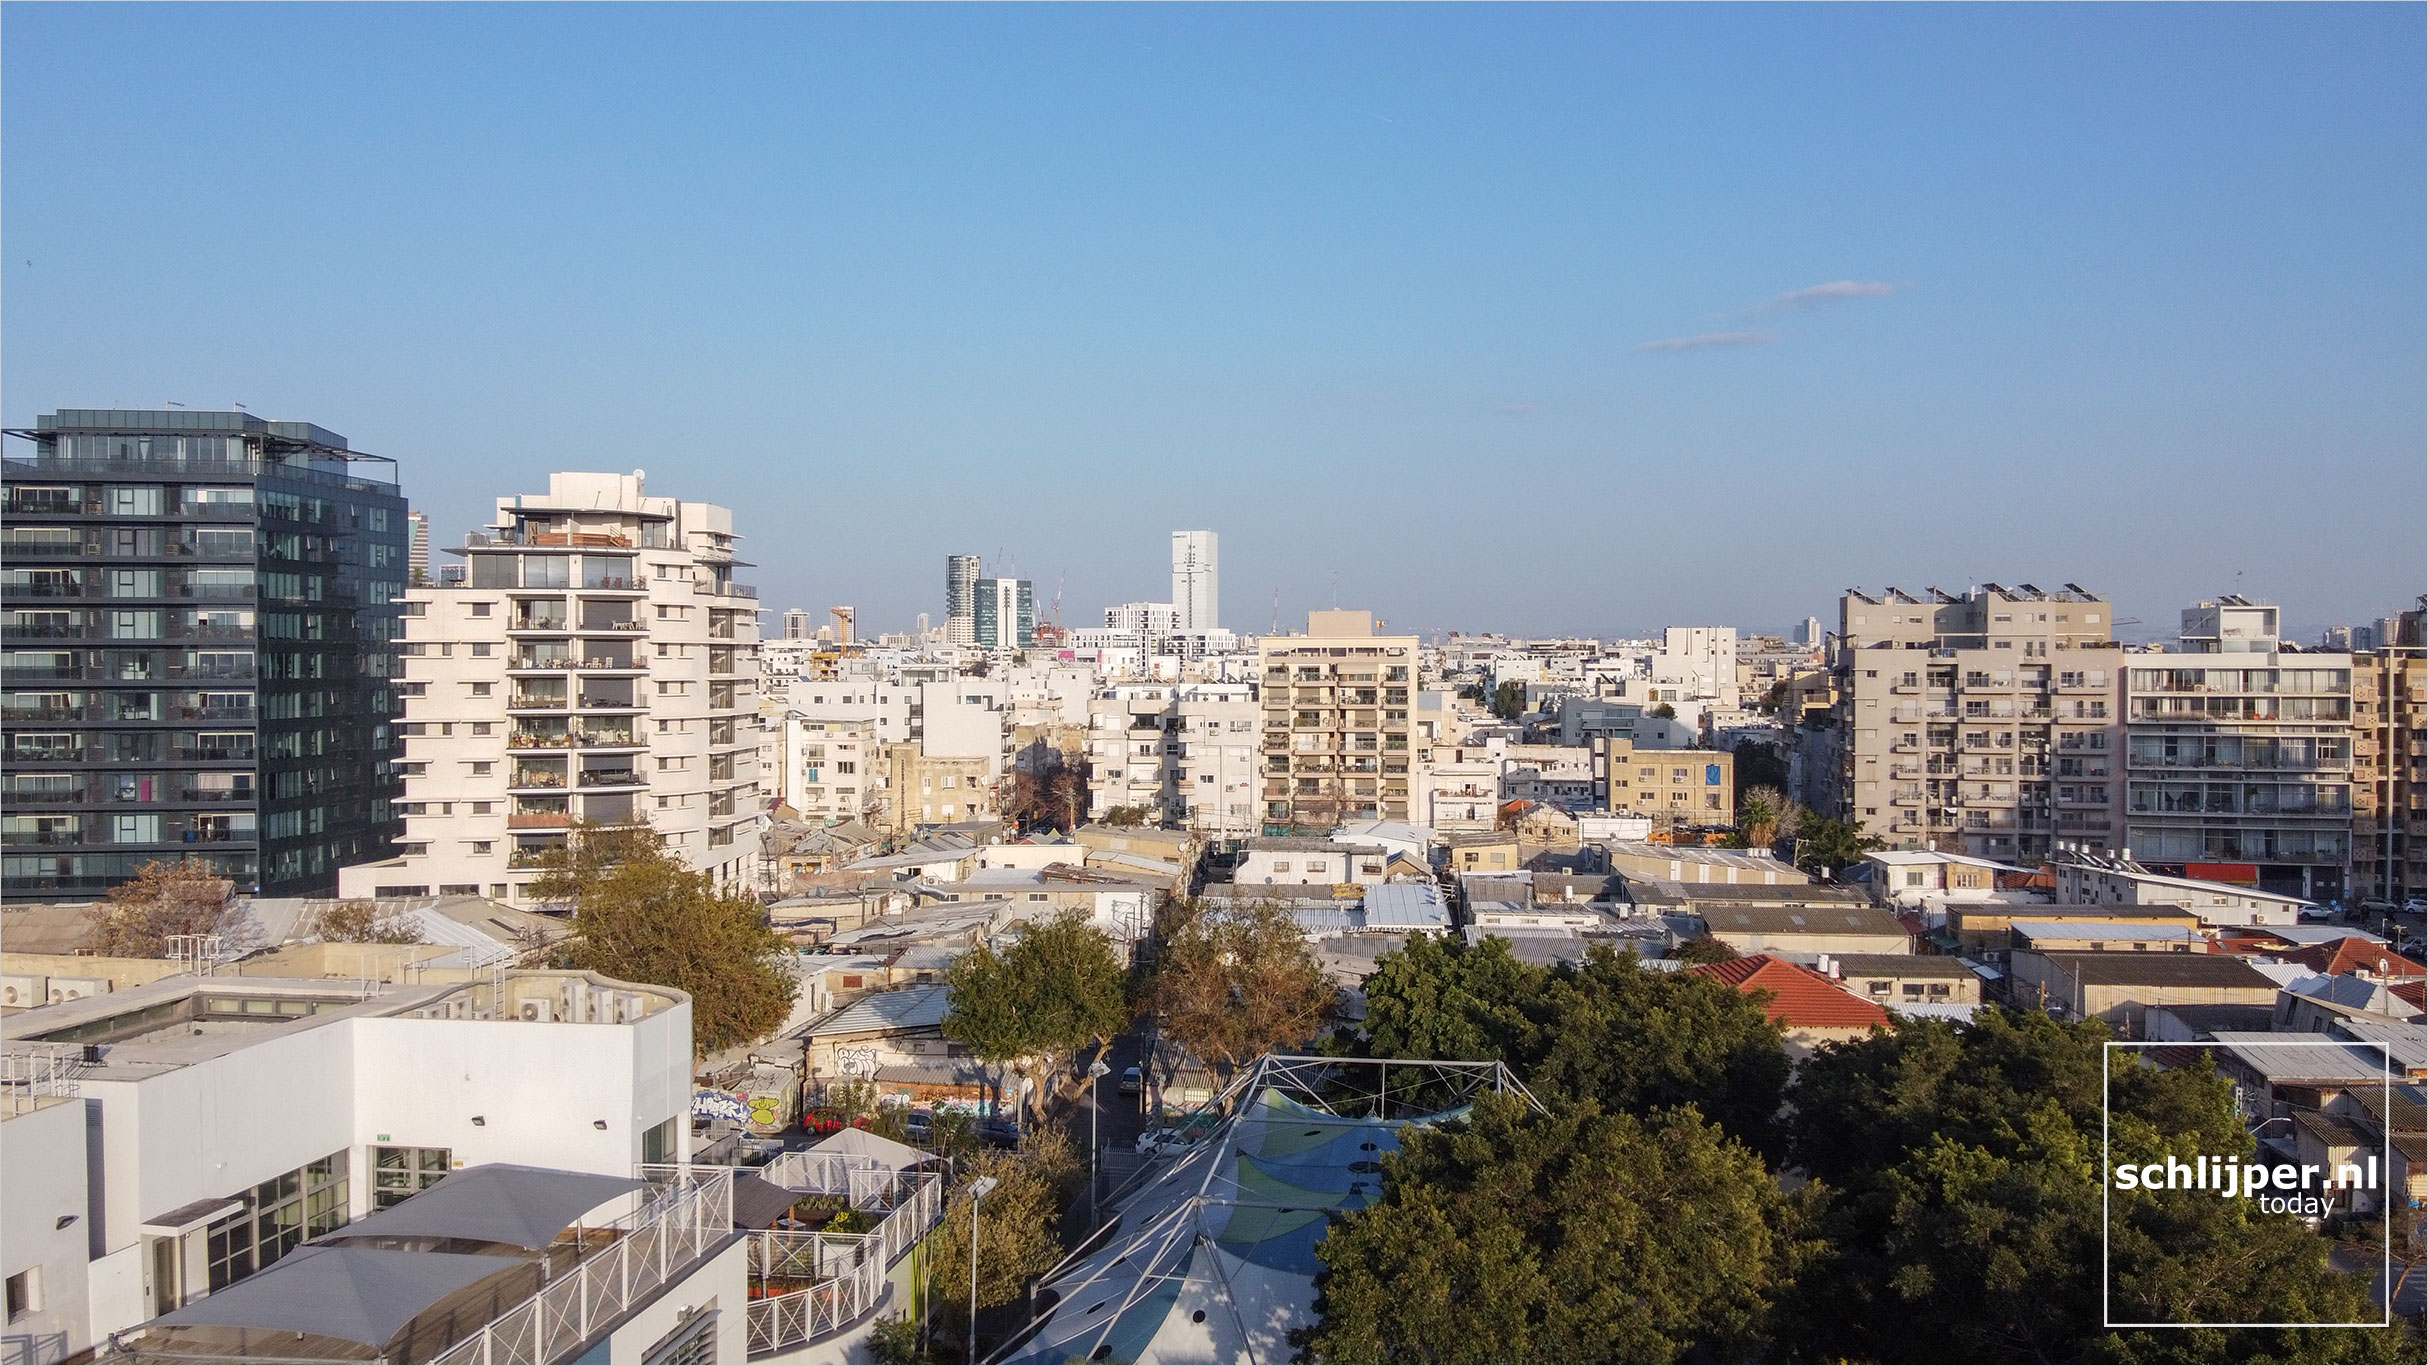 Israel, Tel Aviv, 10 februari 2023